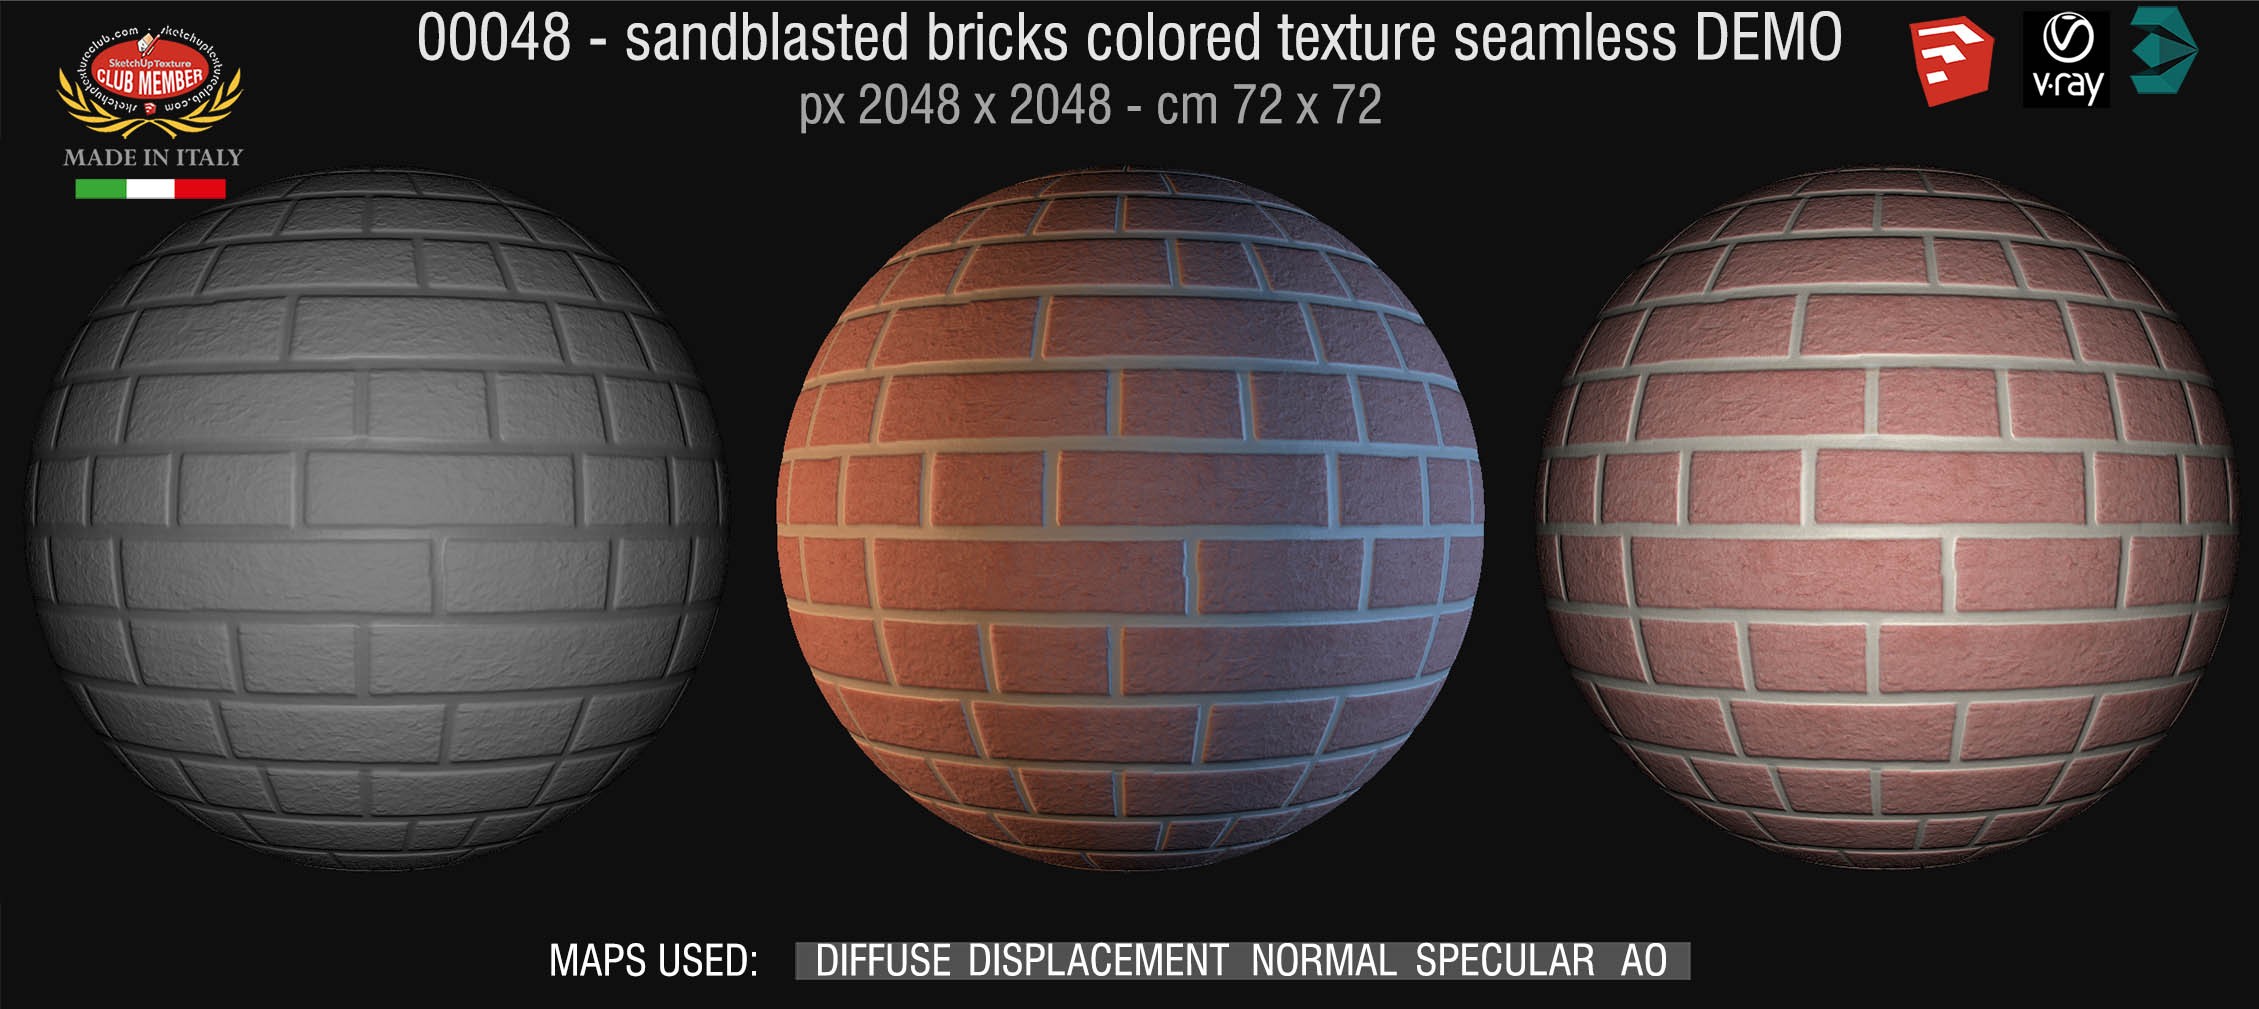 00048 Sandblasted bricks colored texture seamless + maps DEMO